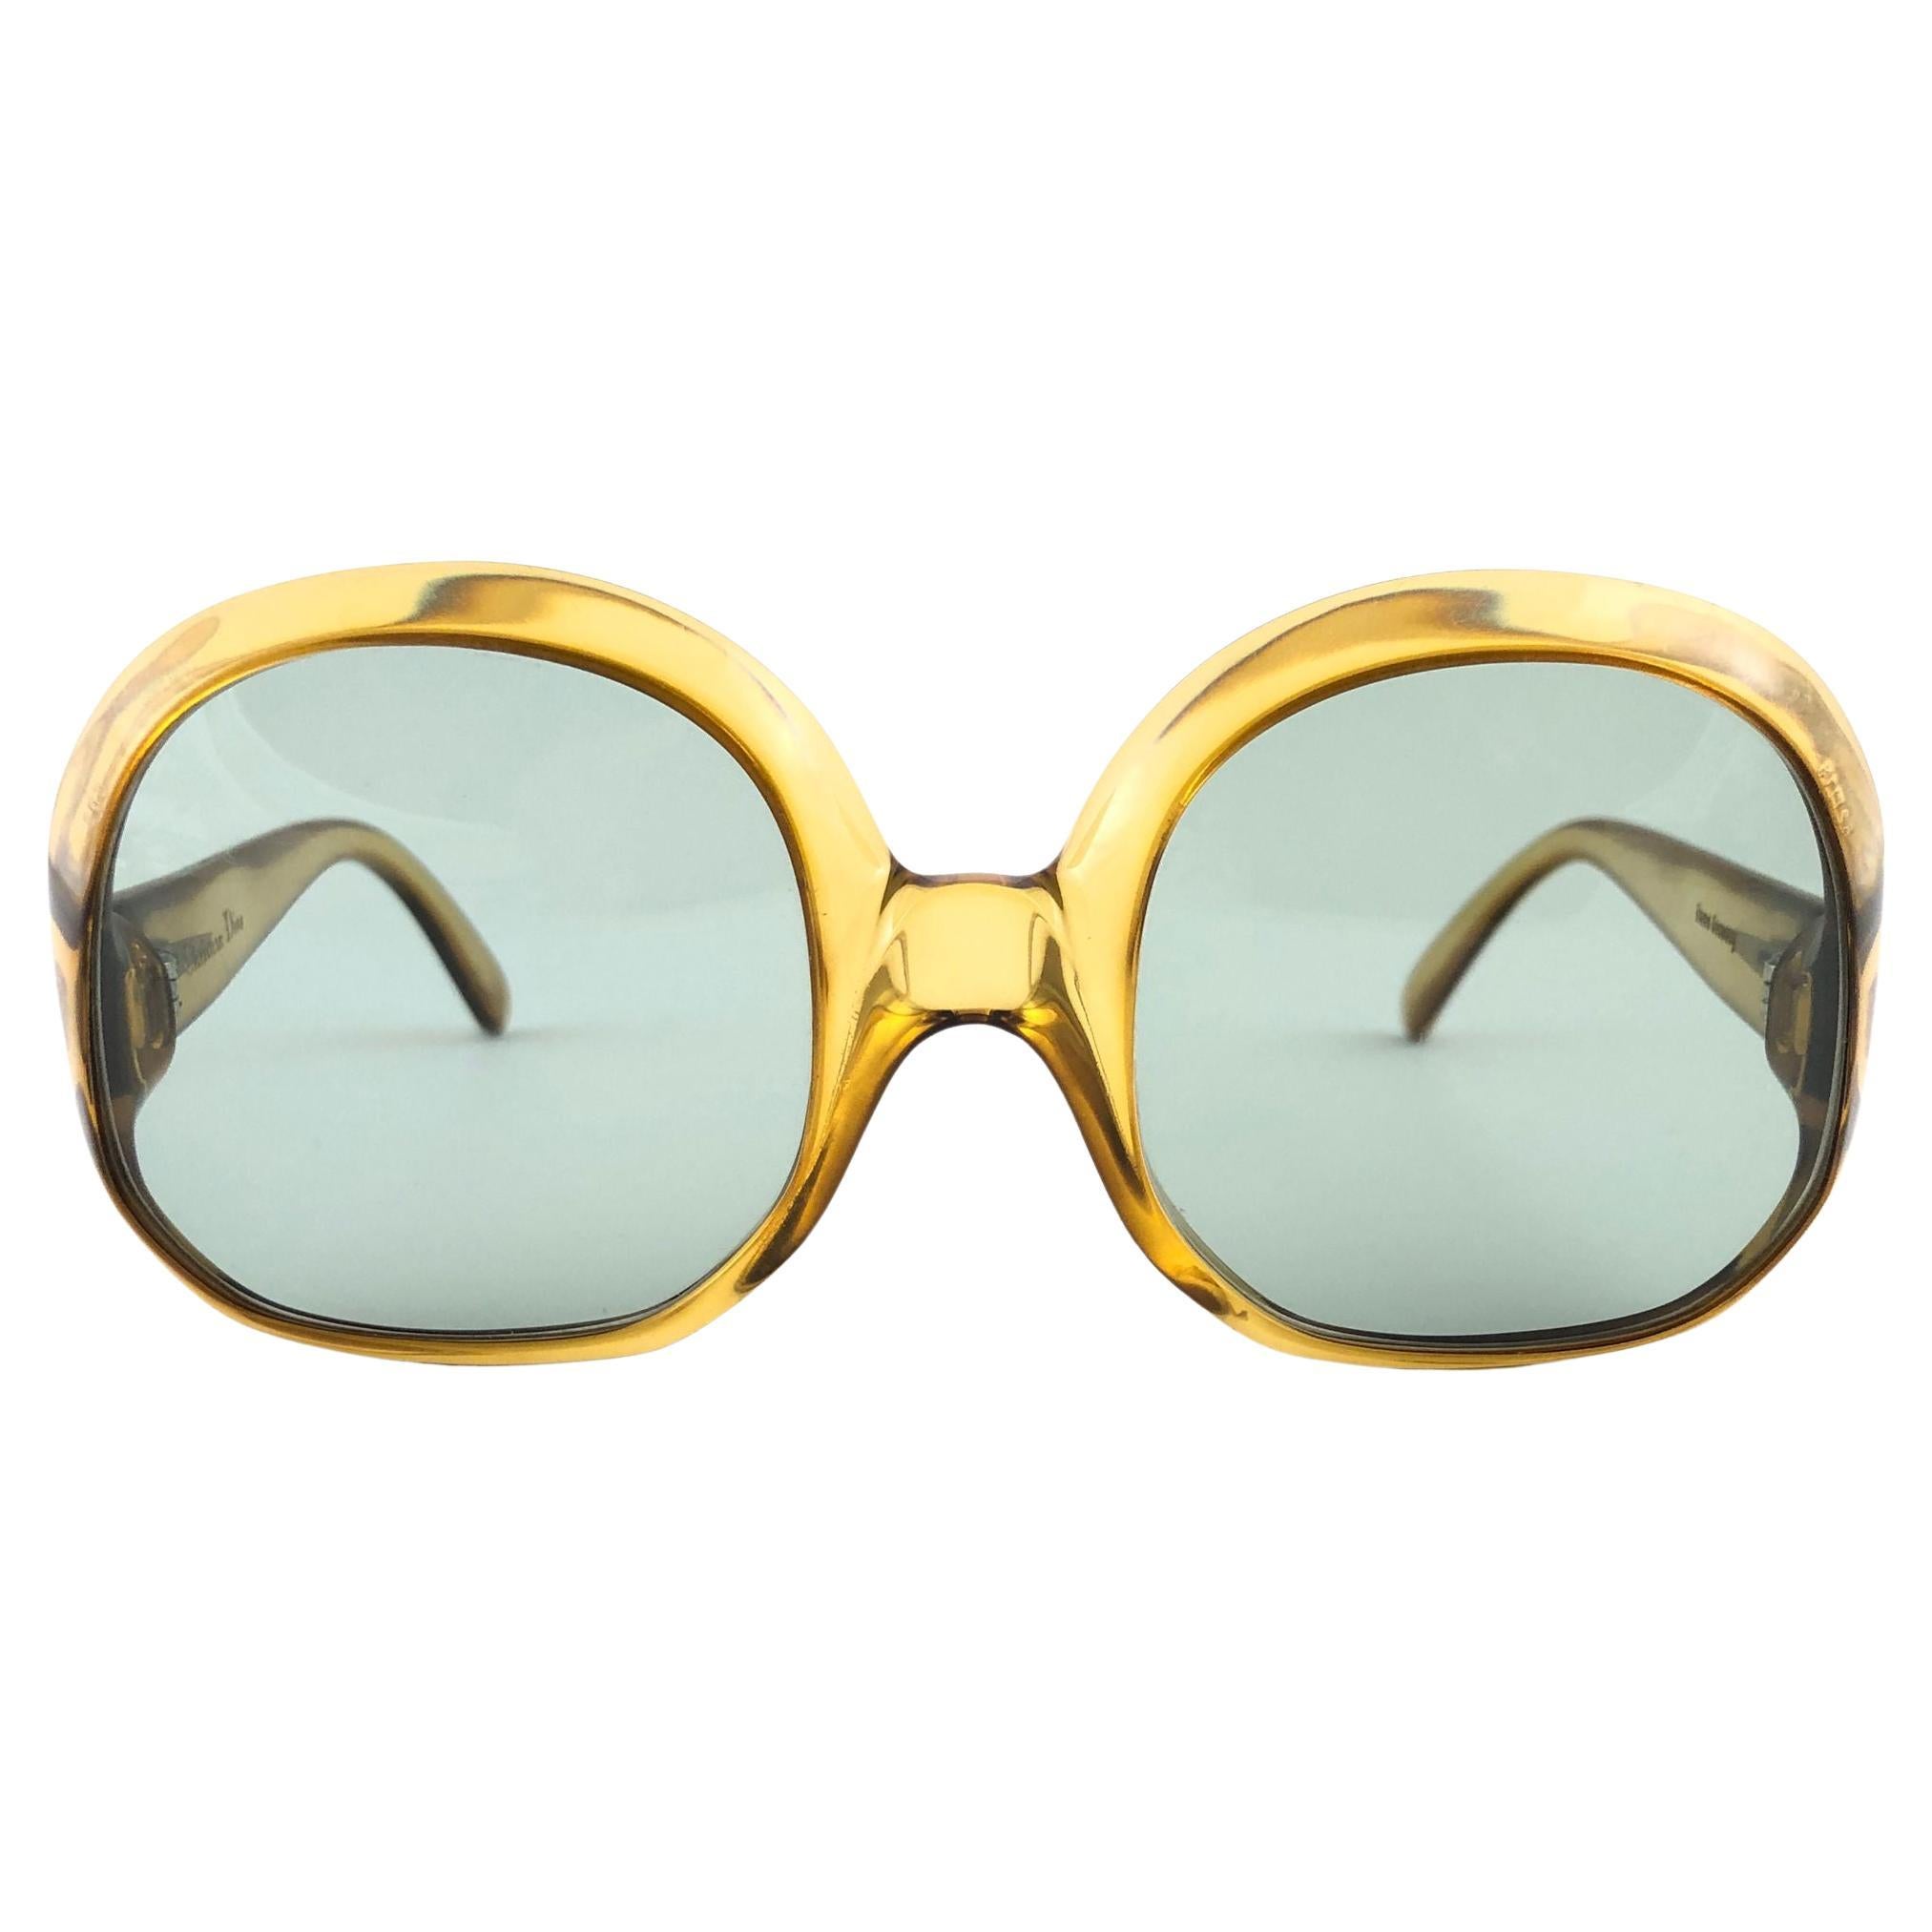 Accessories Sunglasses & Eyewear Sunglasses New NOS vintage CHRISTIAN DIOR 2197 "Crystal" sunglasses Germany 70's Medium 